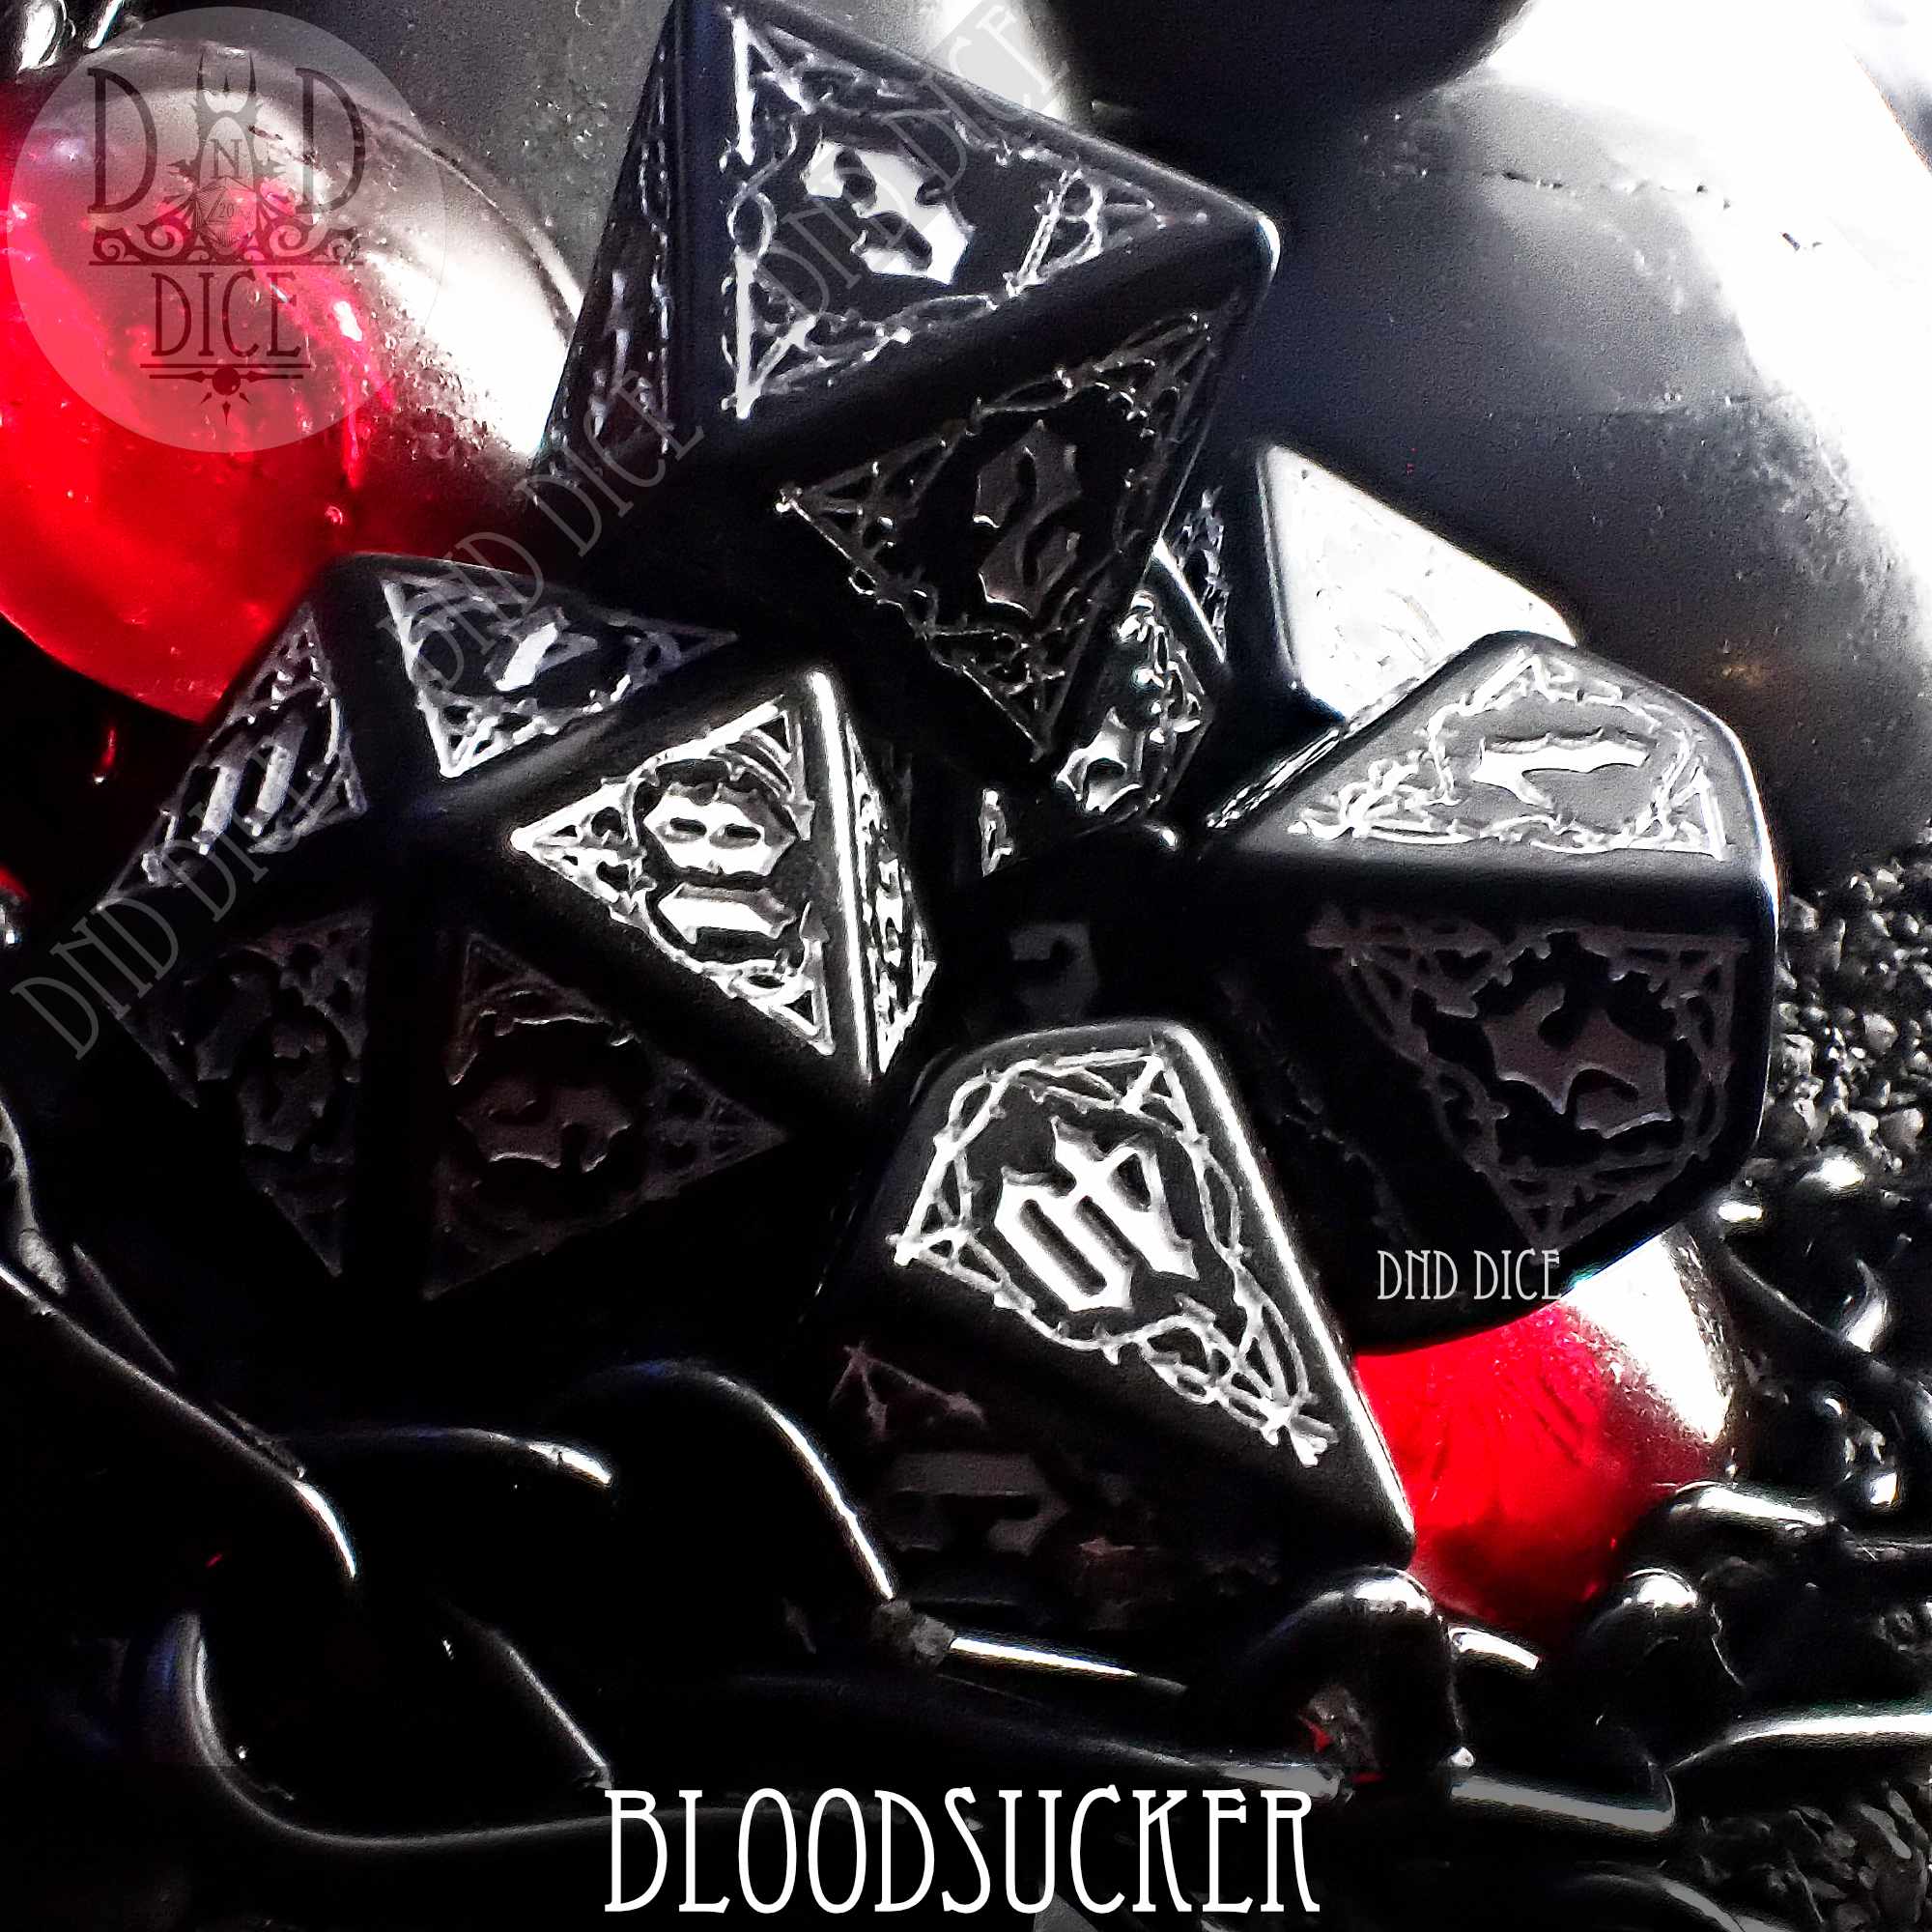 Bloodsucker Dice Set